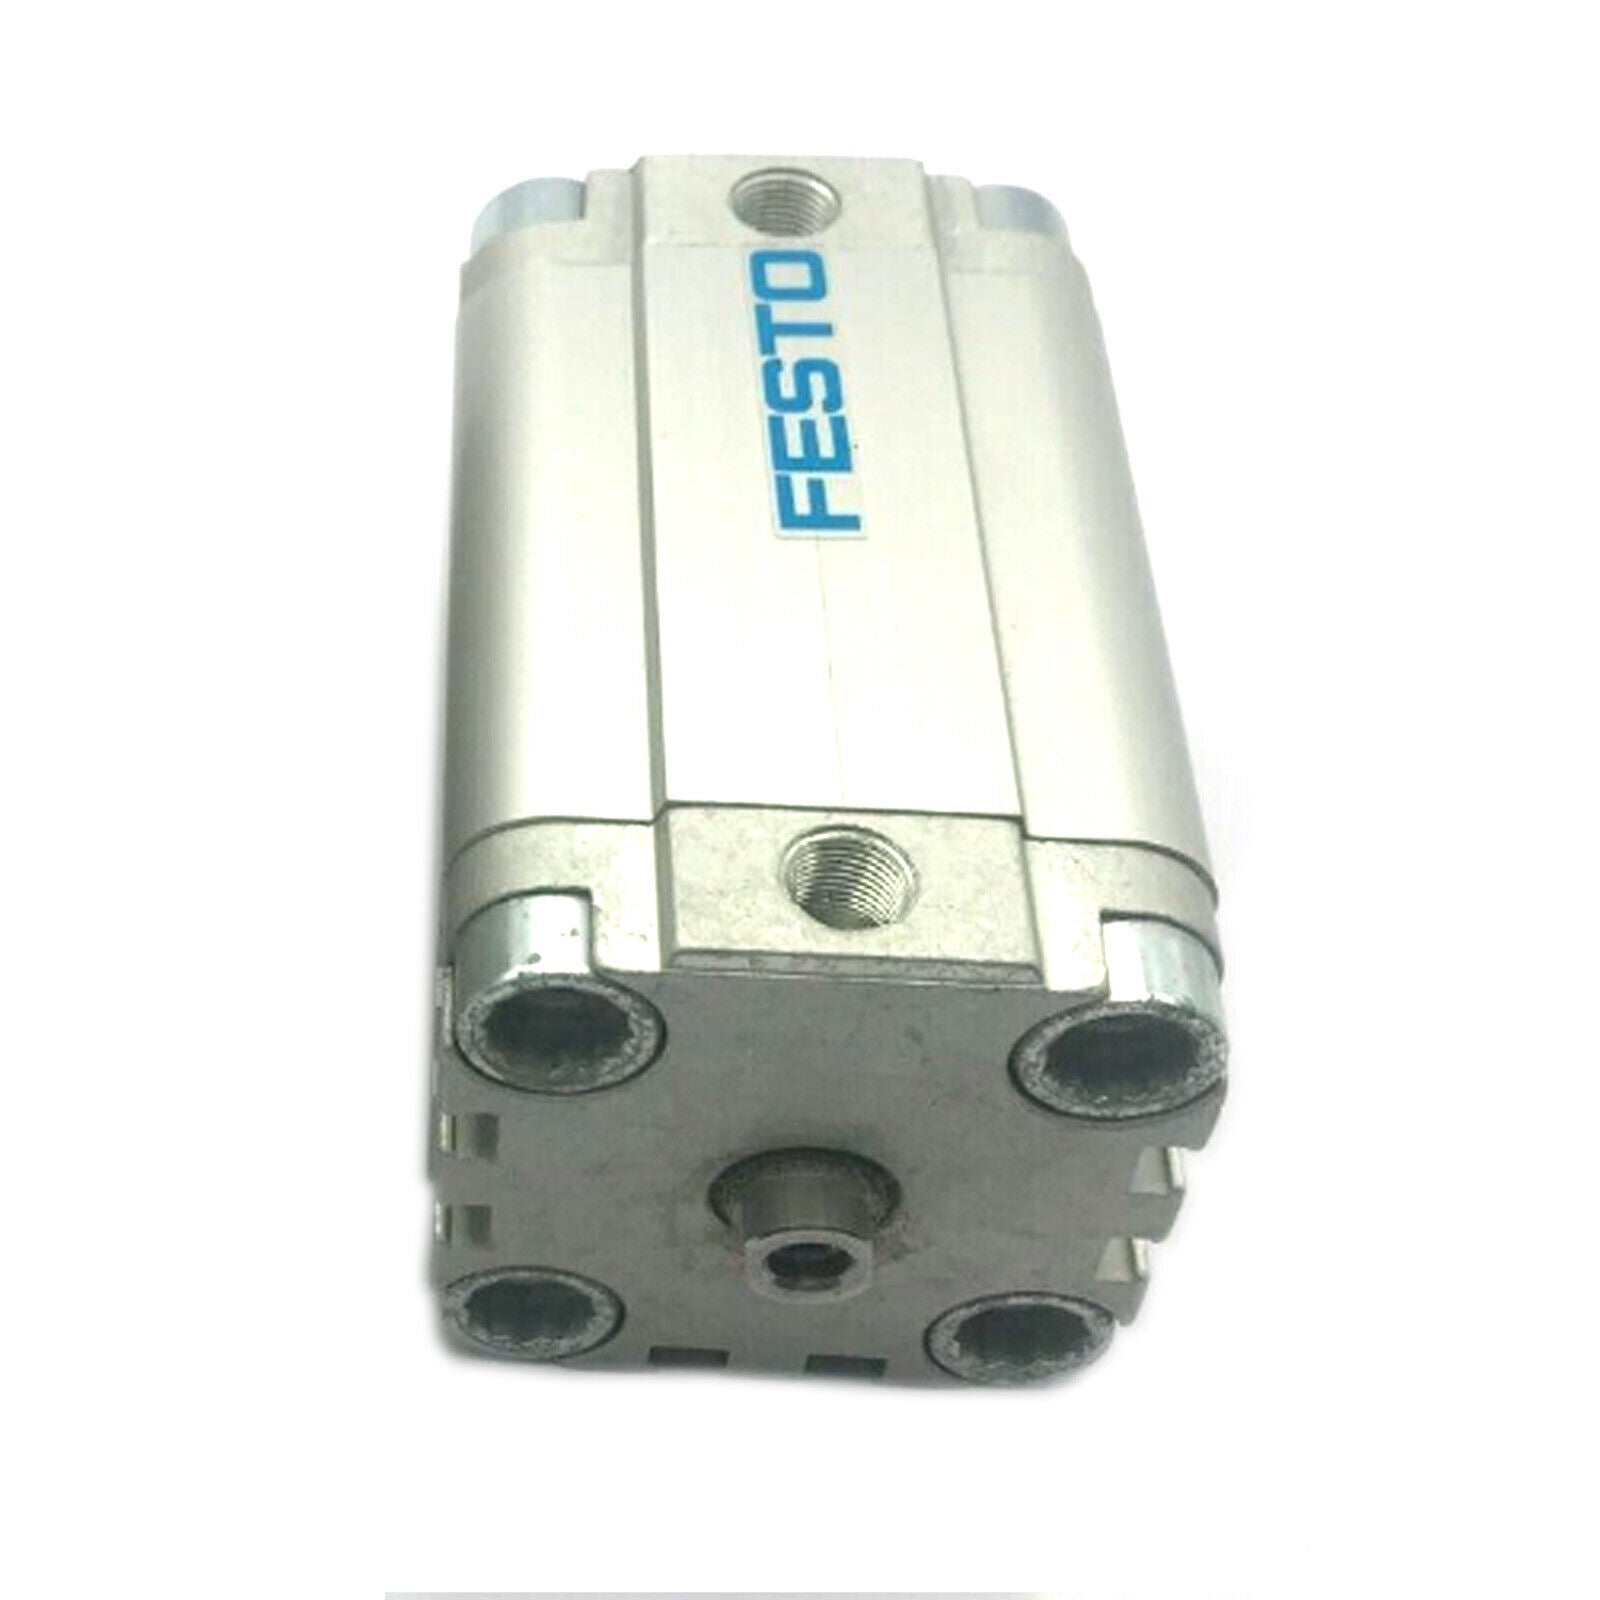 1PC  FOR FESTO Cylinder ADVU-40-50-P-A 156547